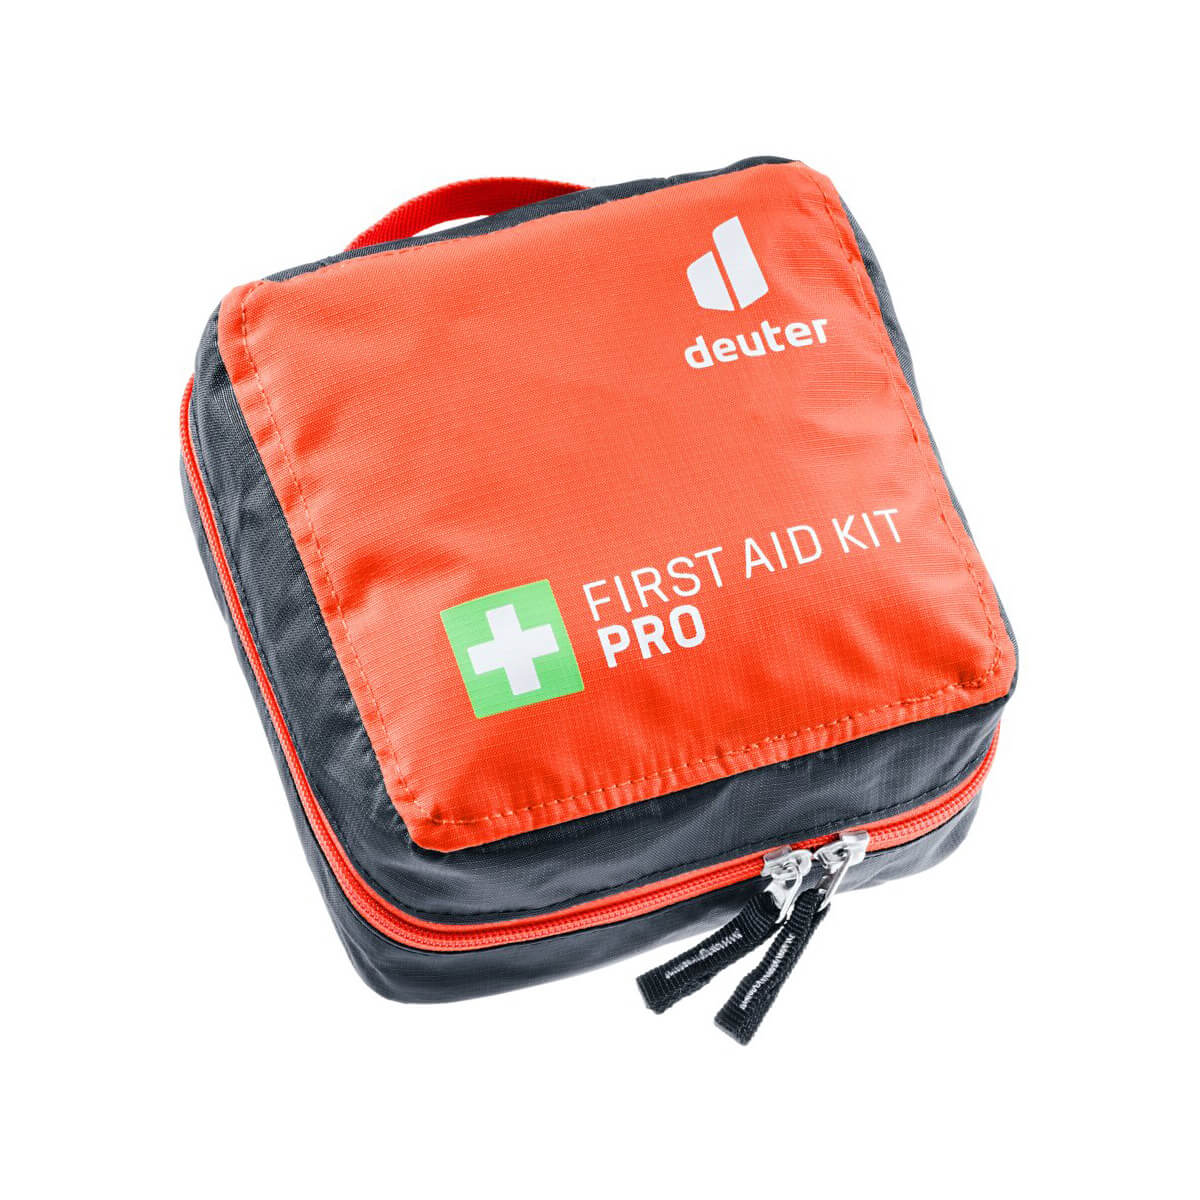 deuter-first-aid-kit-pro